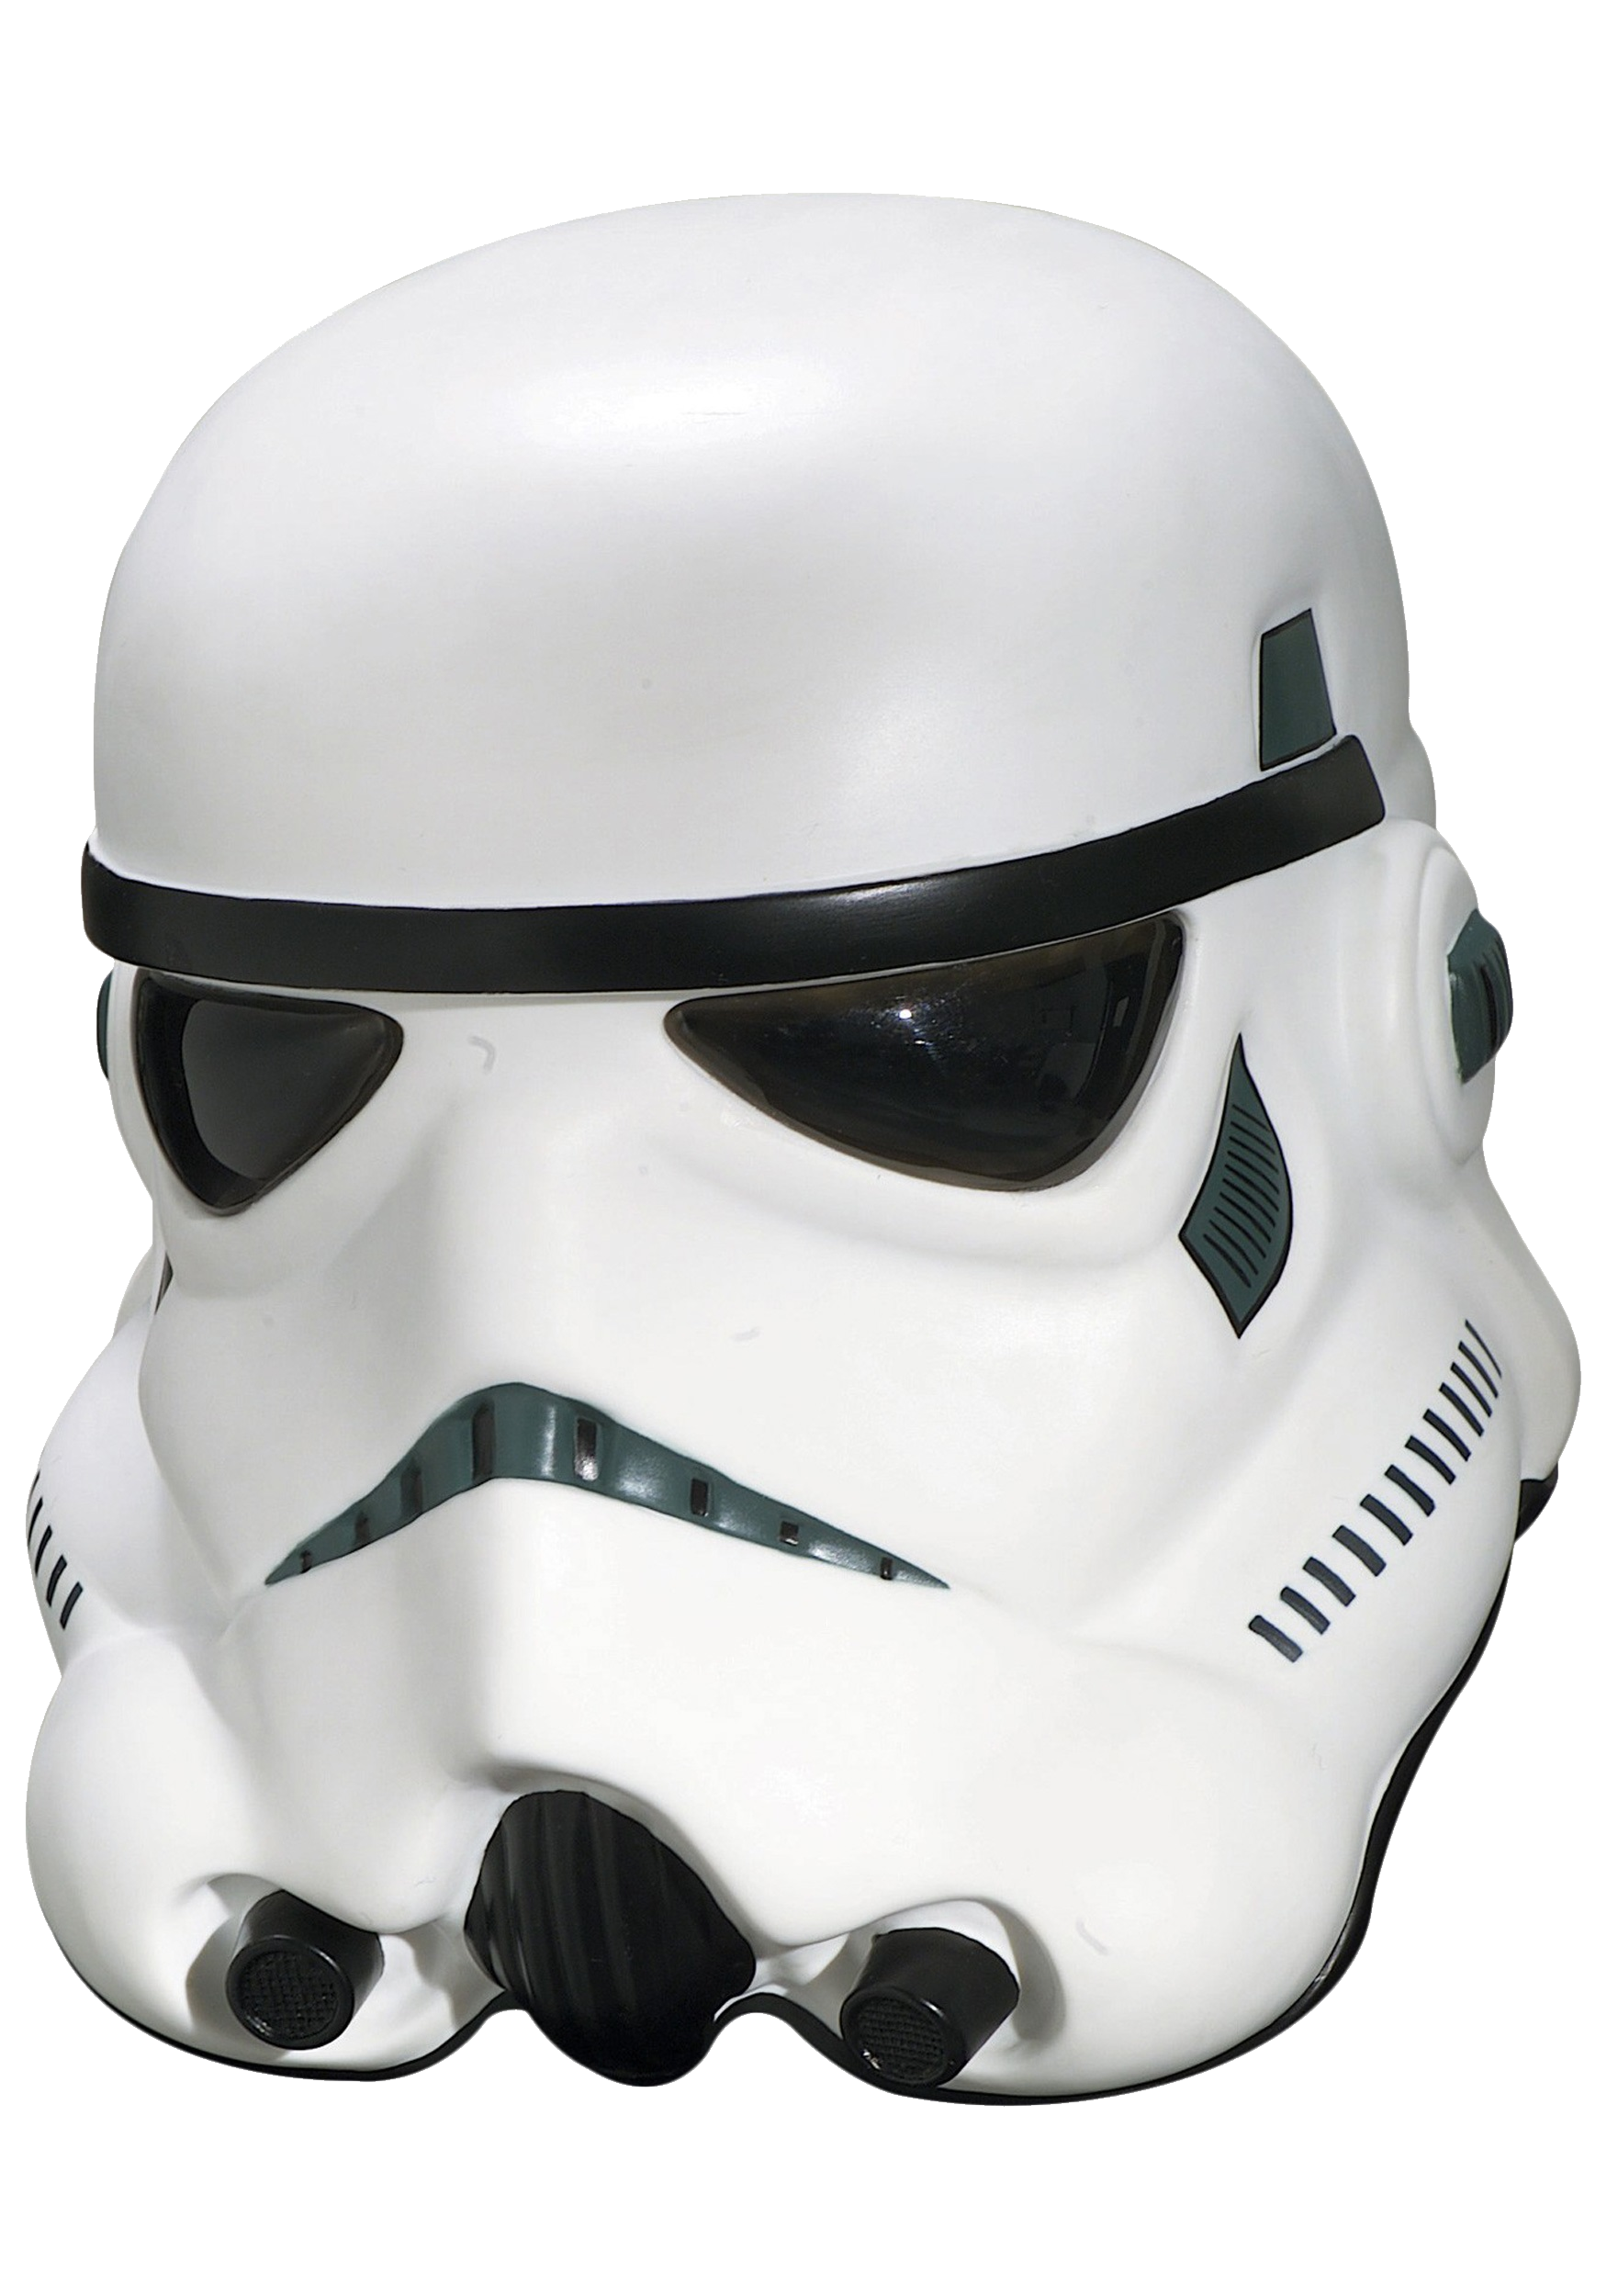 Stormtrooper Star Wars PNG